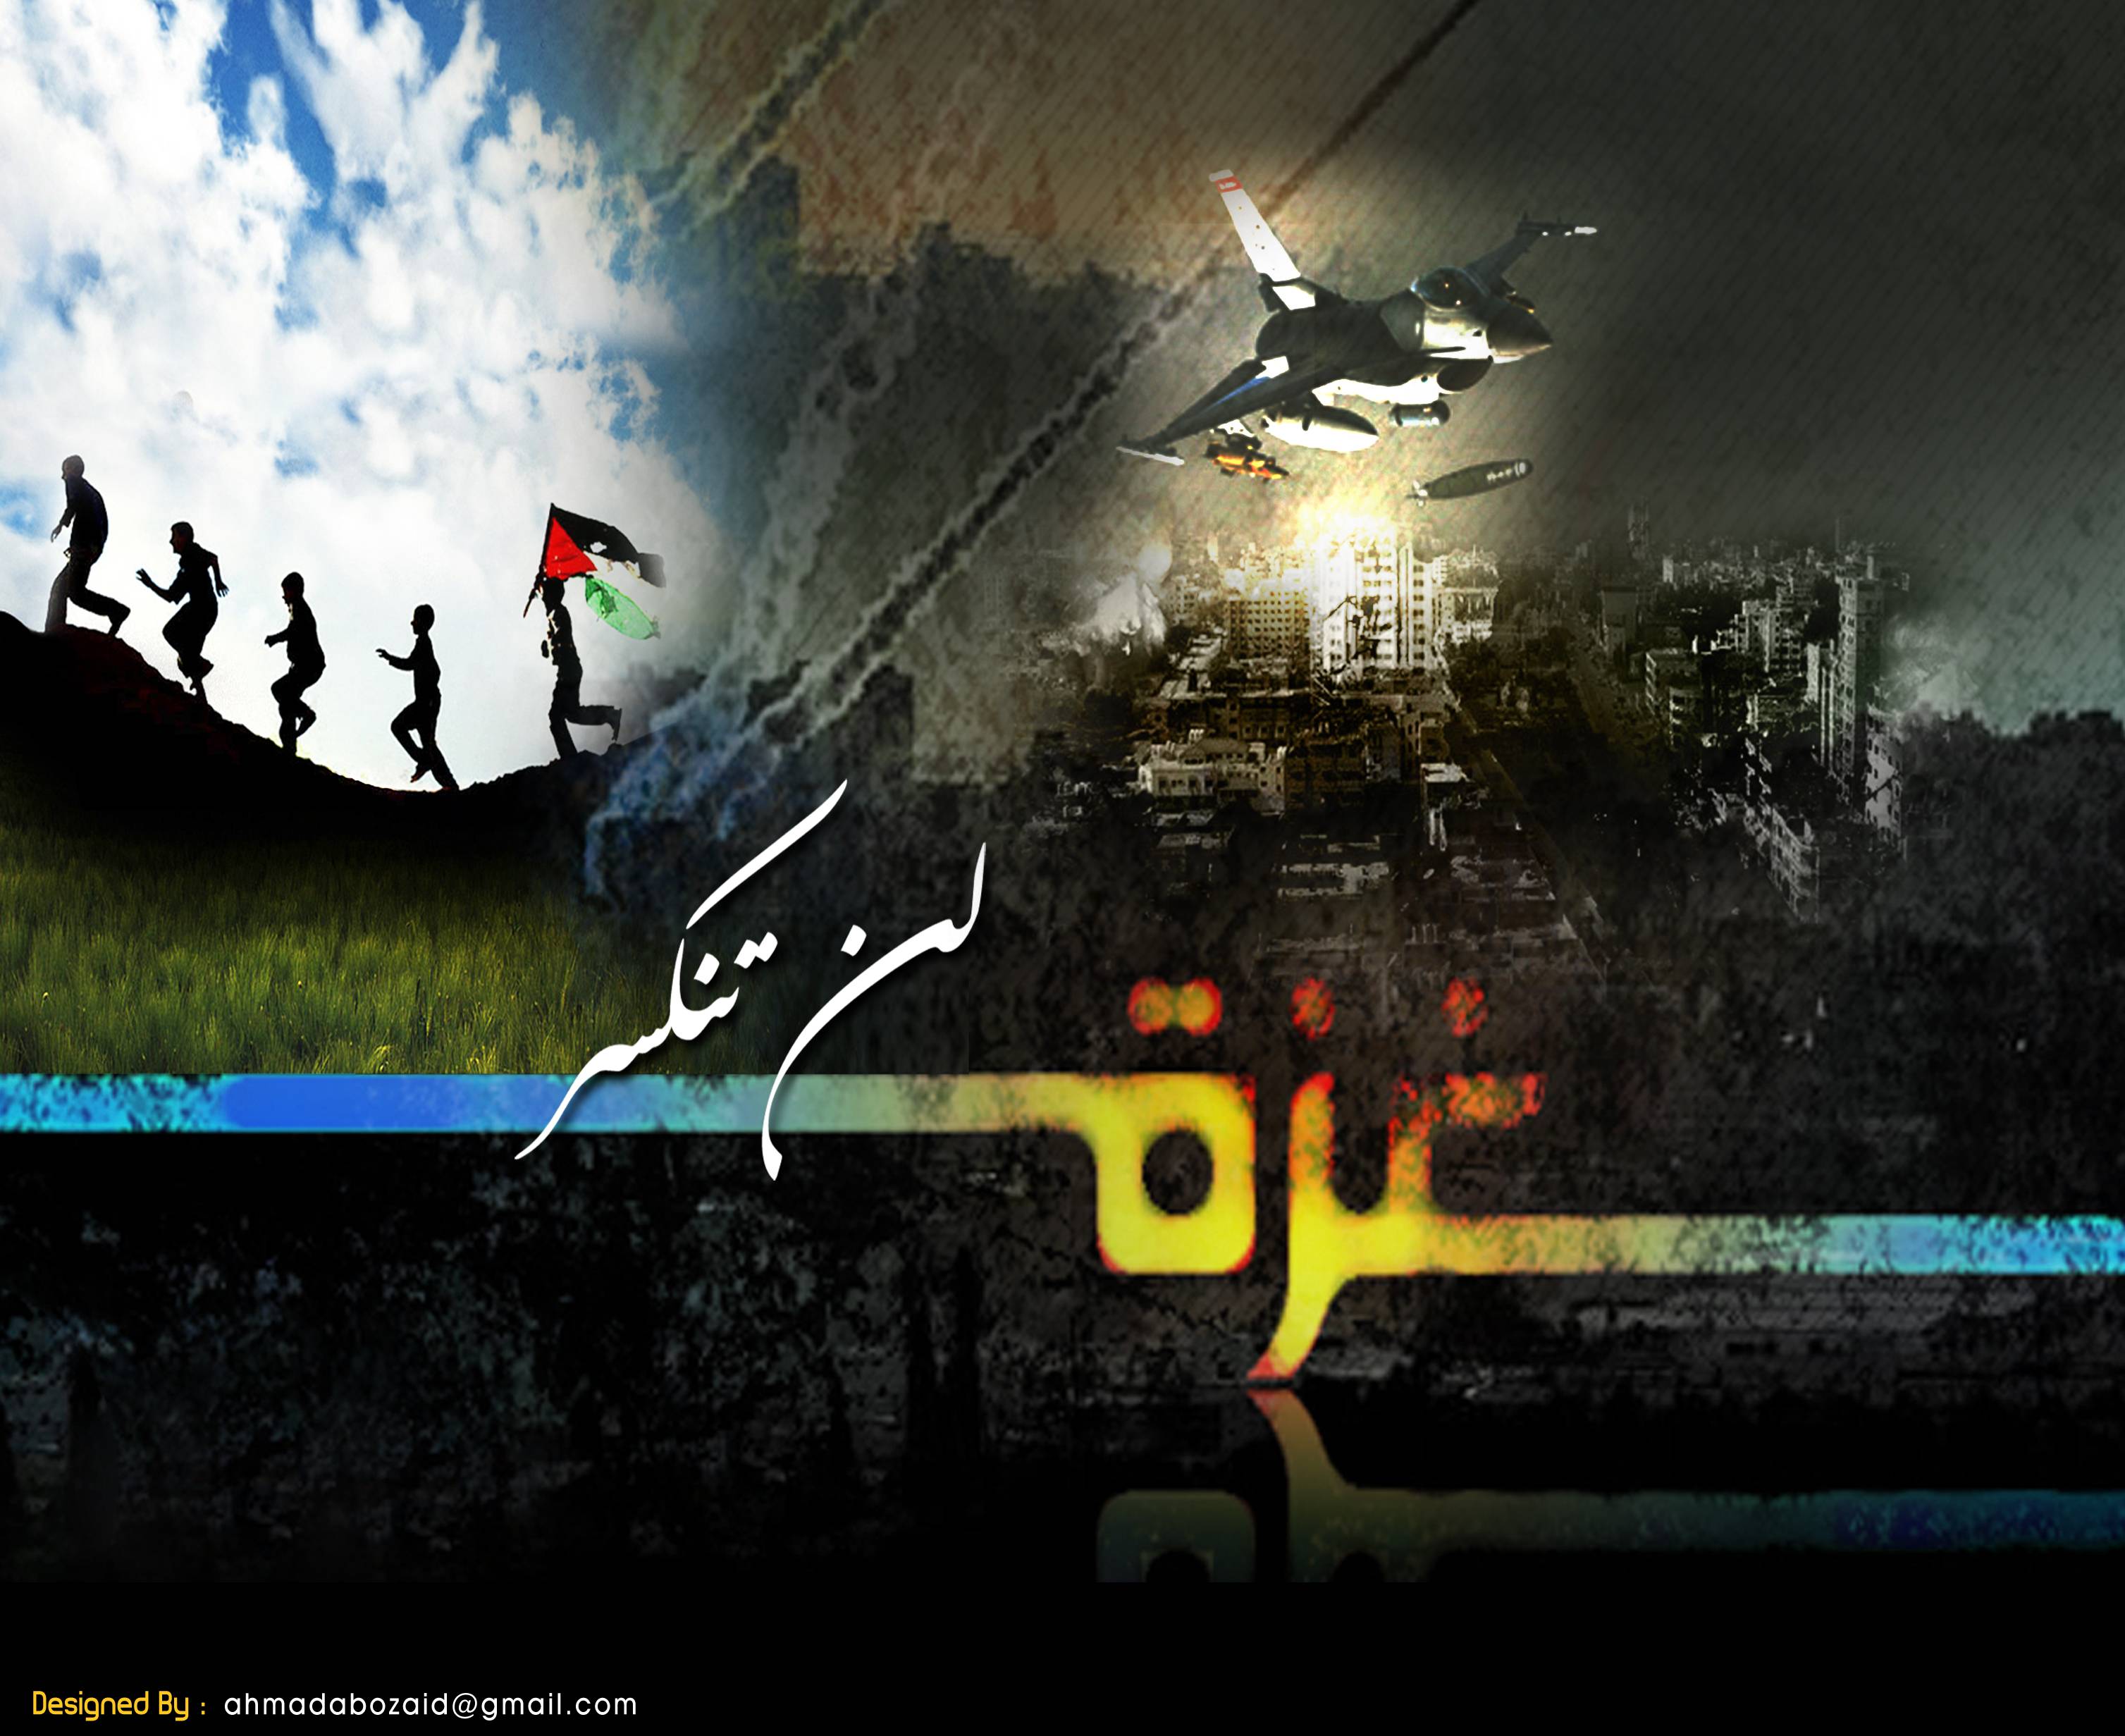 Save Palestine Wallpaper